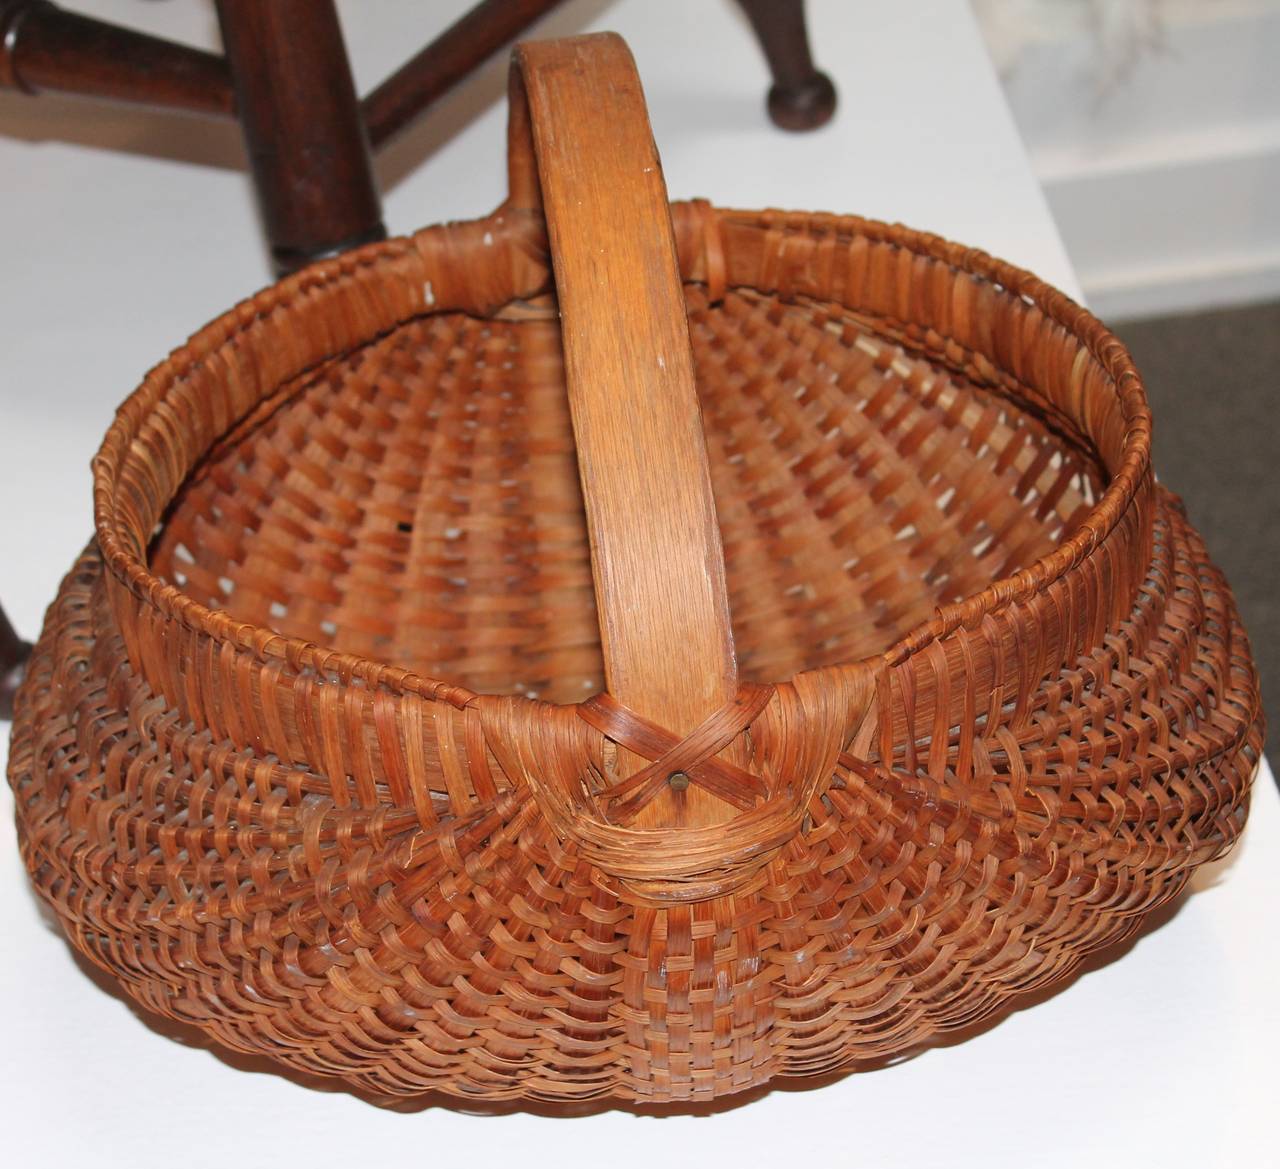 Hand-Woven Monumental 19th Century Hiney Basket from Pennsylvania